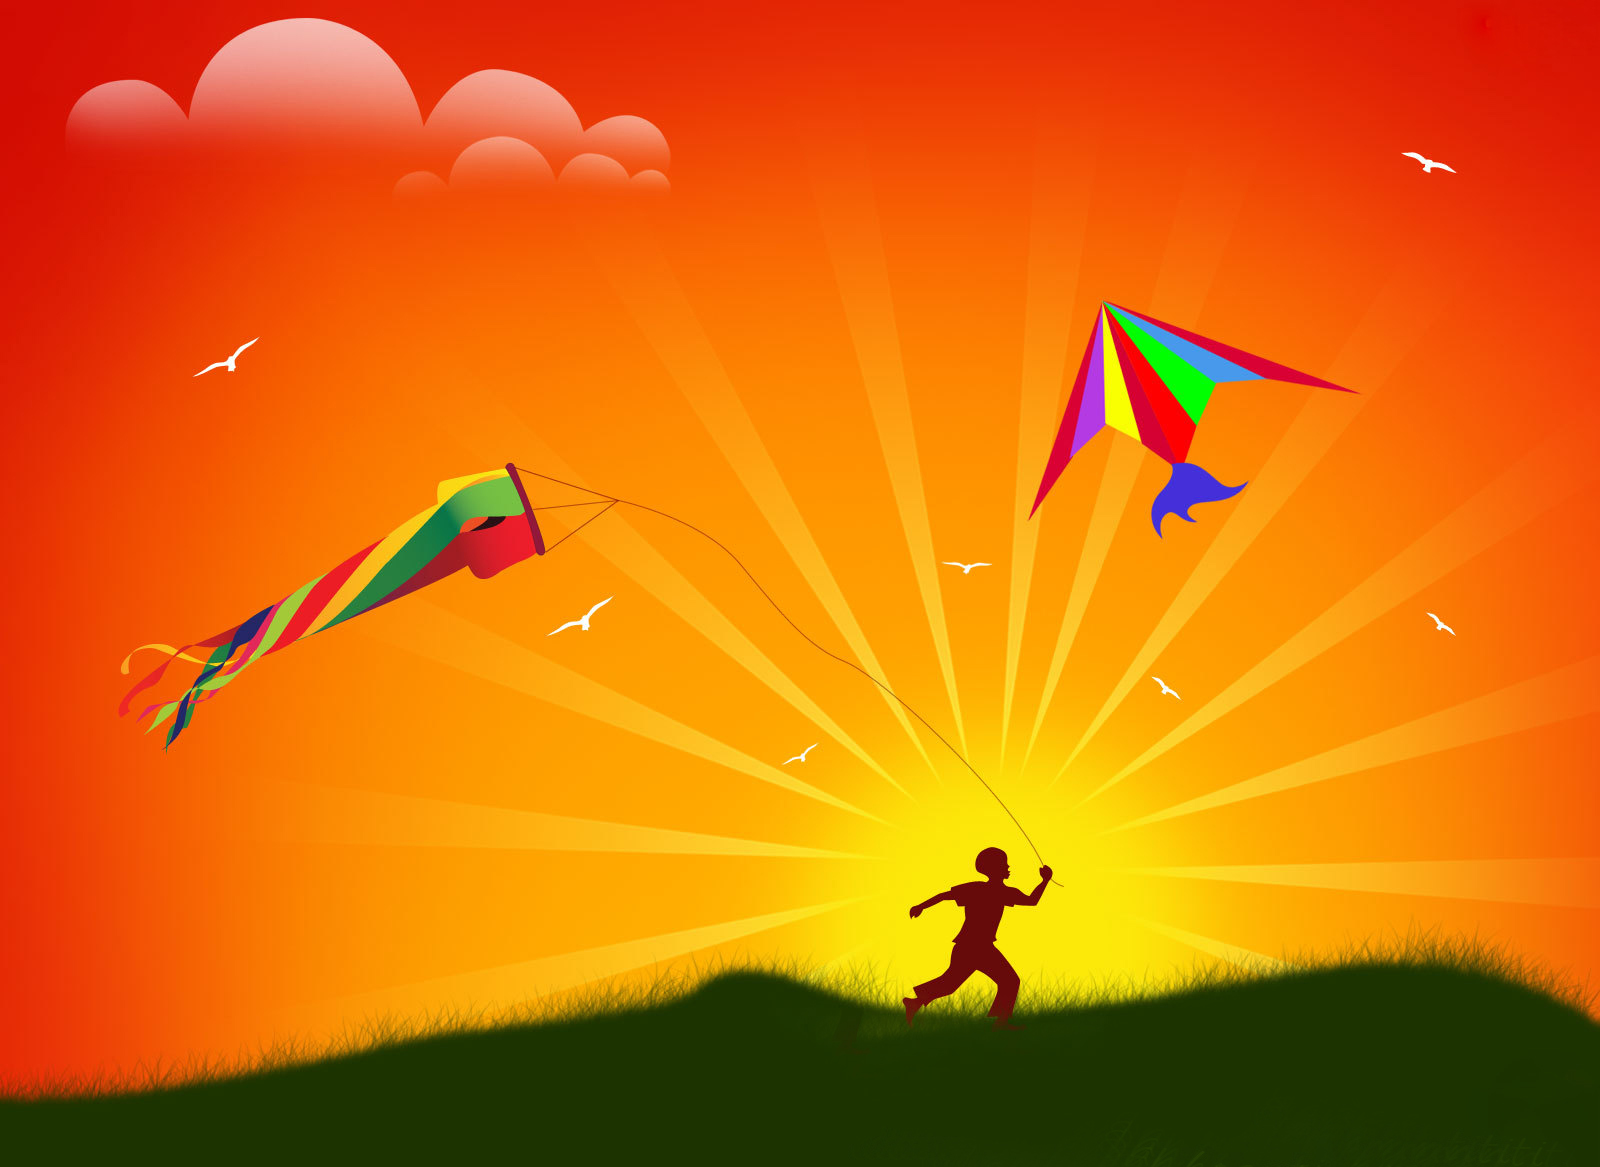 happy sankranti kite flying festival images 